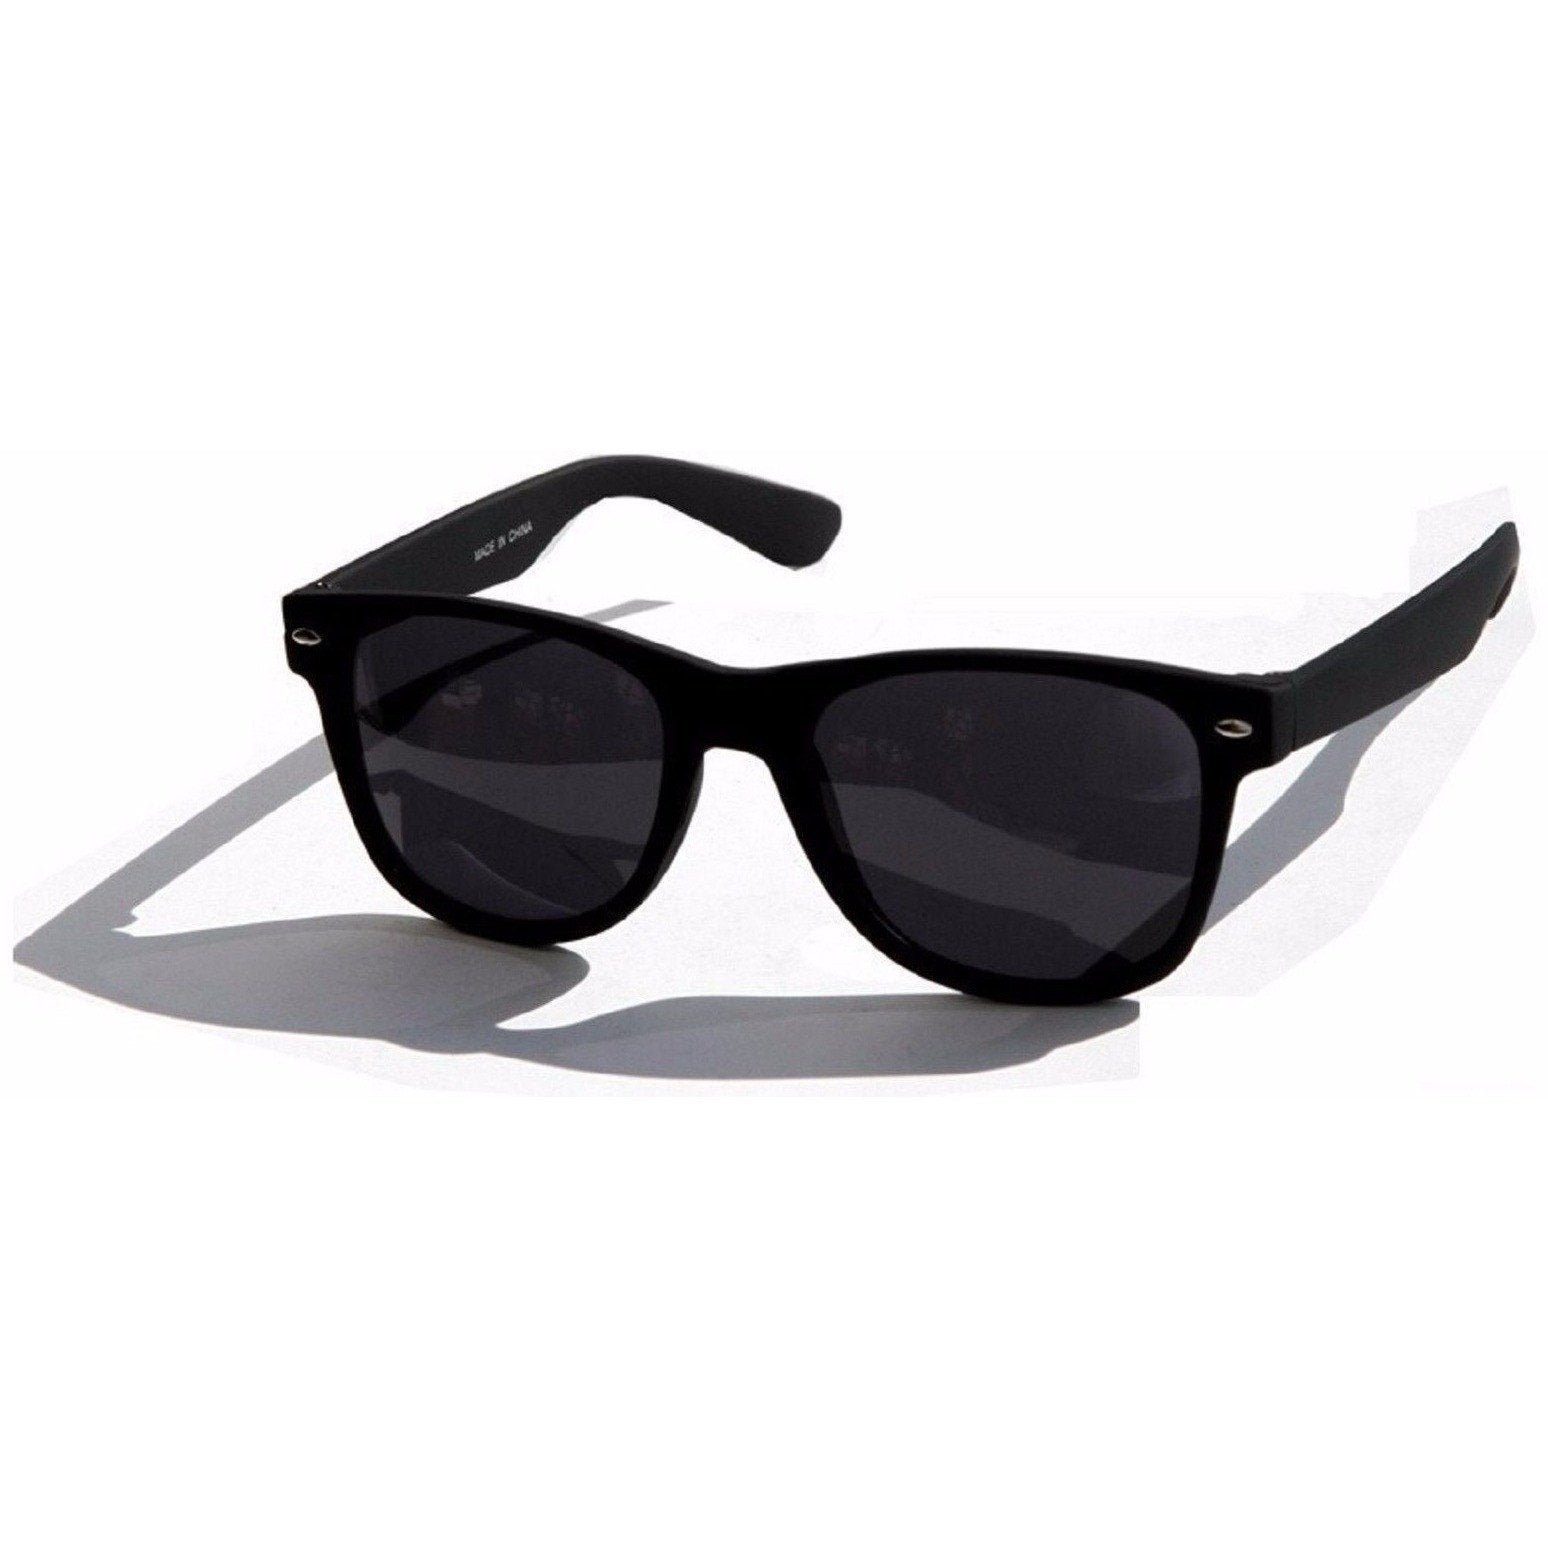 Top more than 175 gangster sunglasses super hot